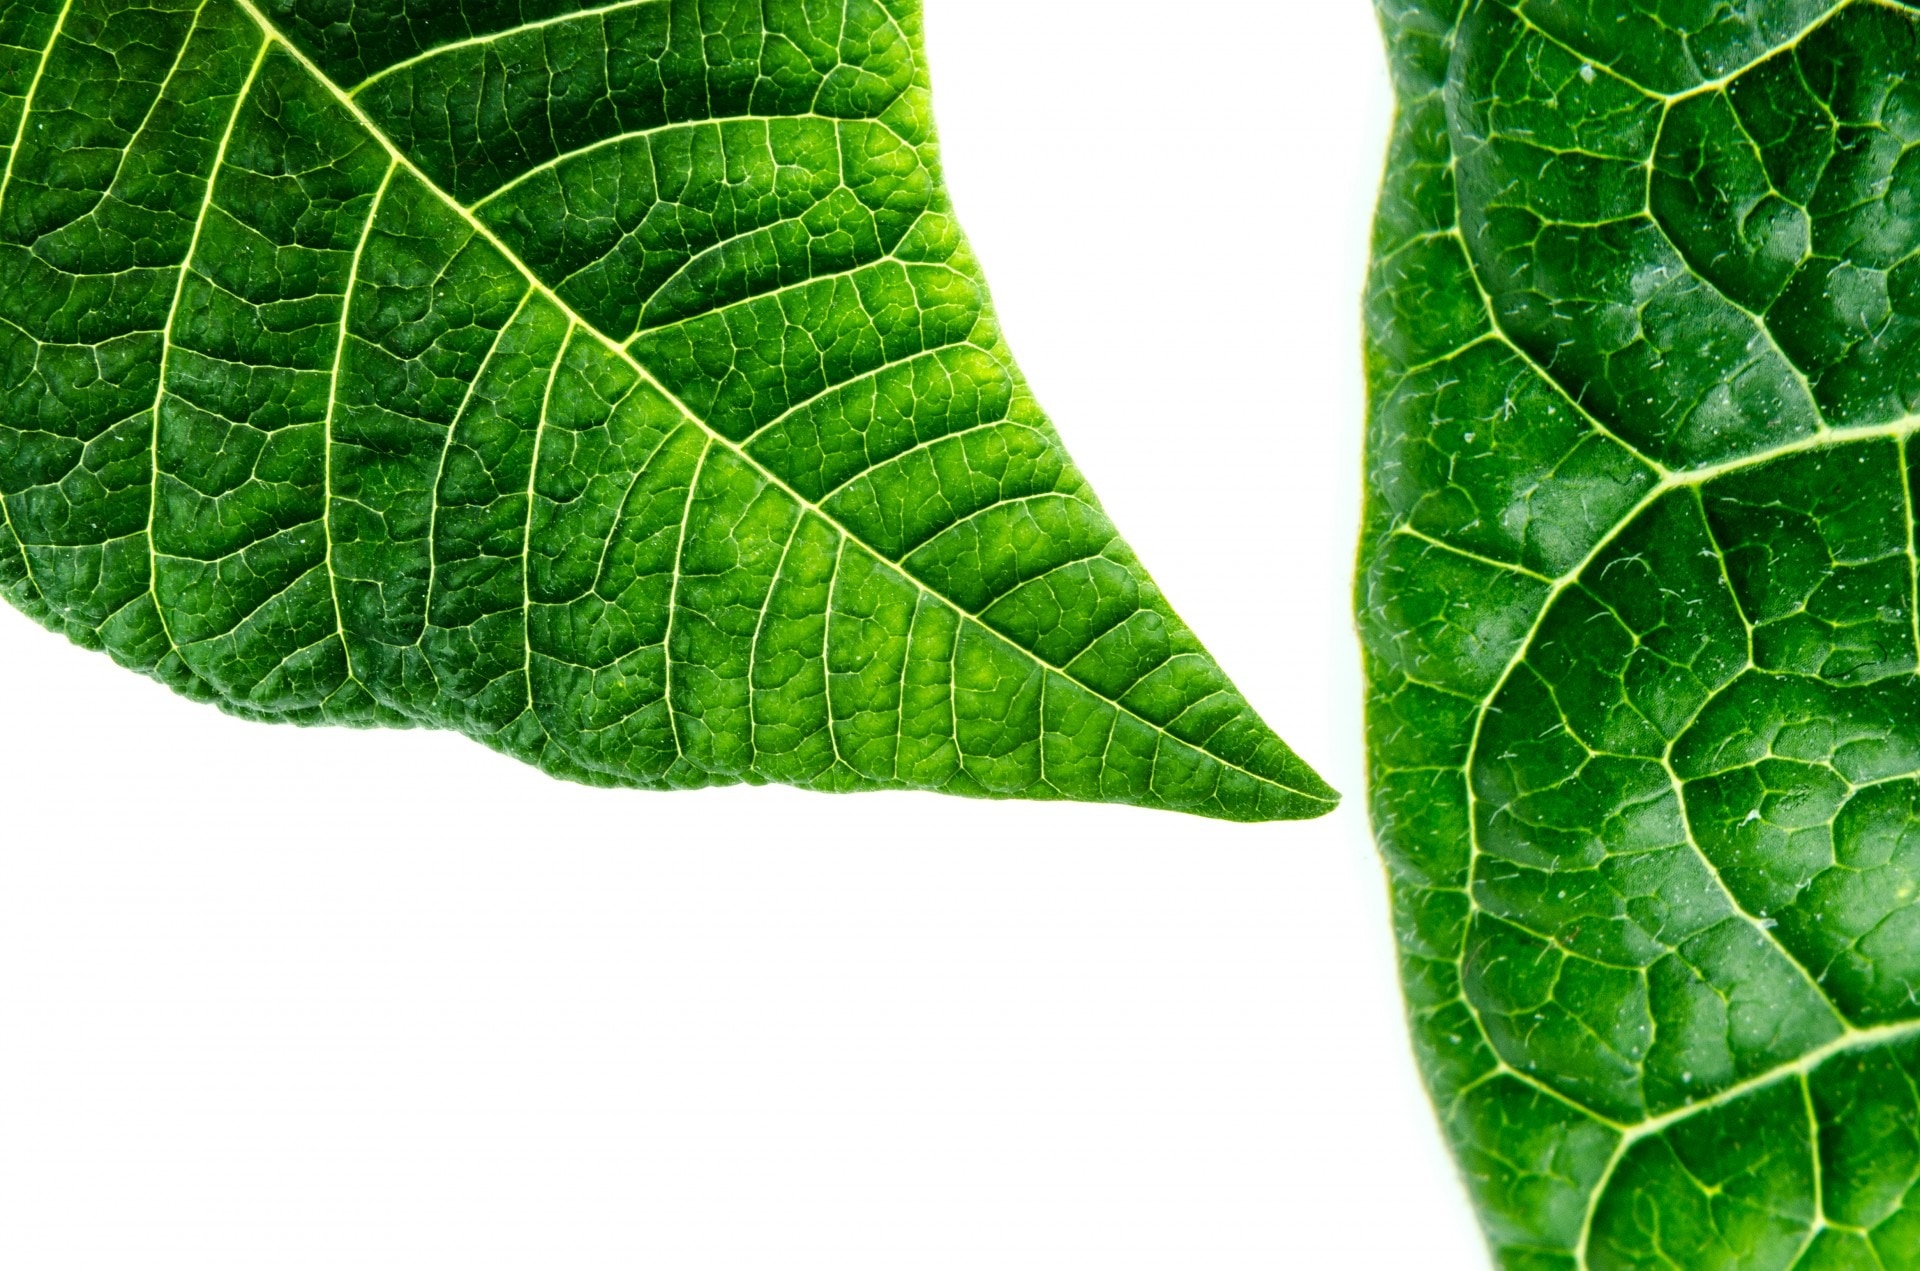 Organic, Macro, Green, Environmental, leaf, green color